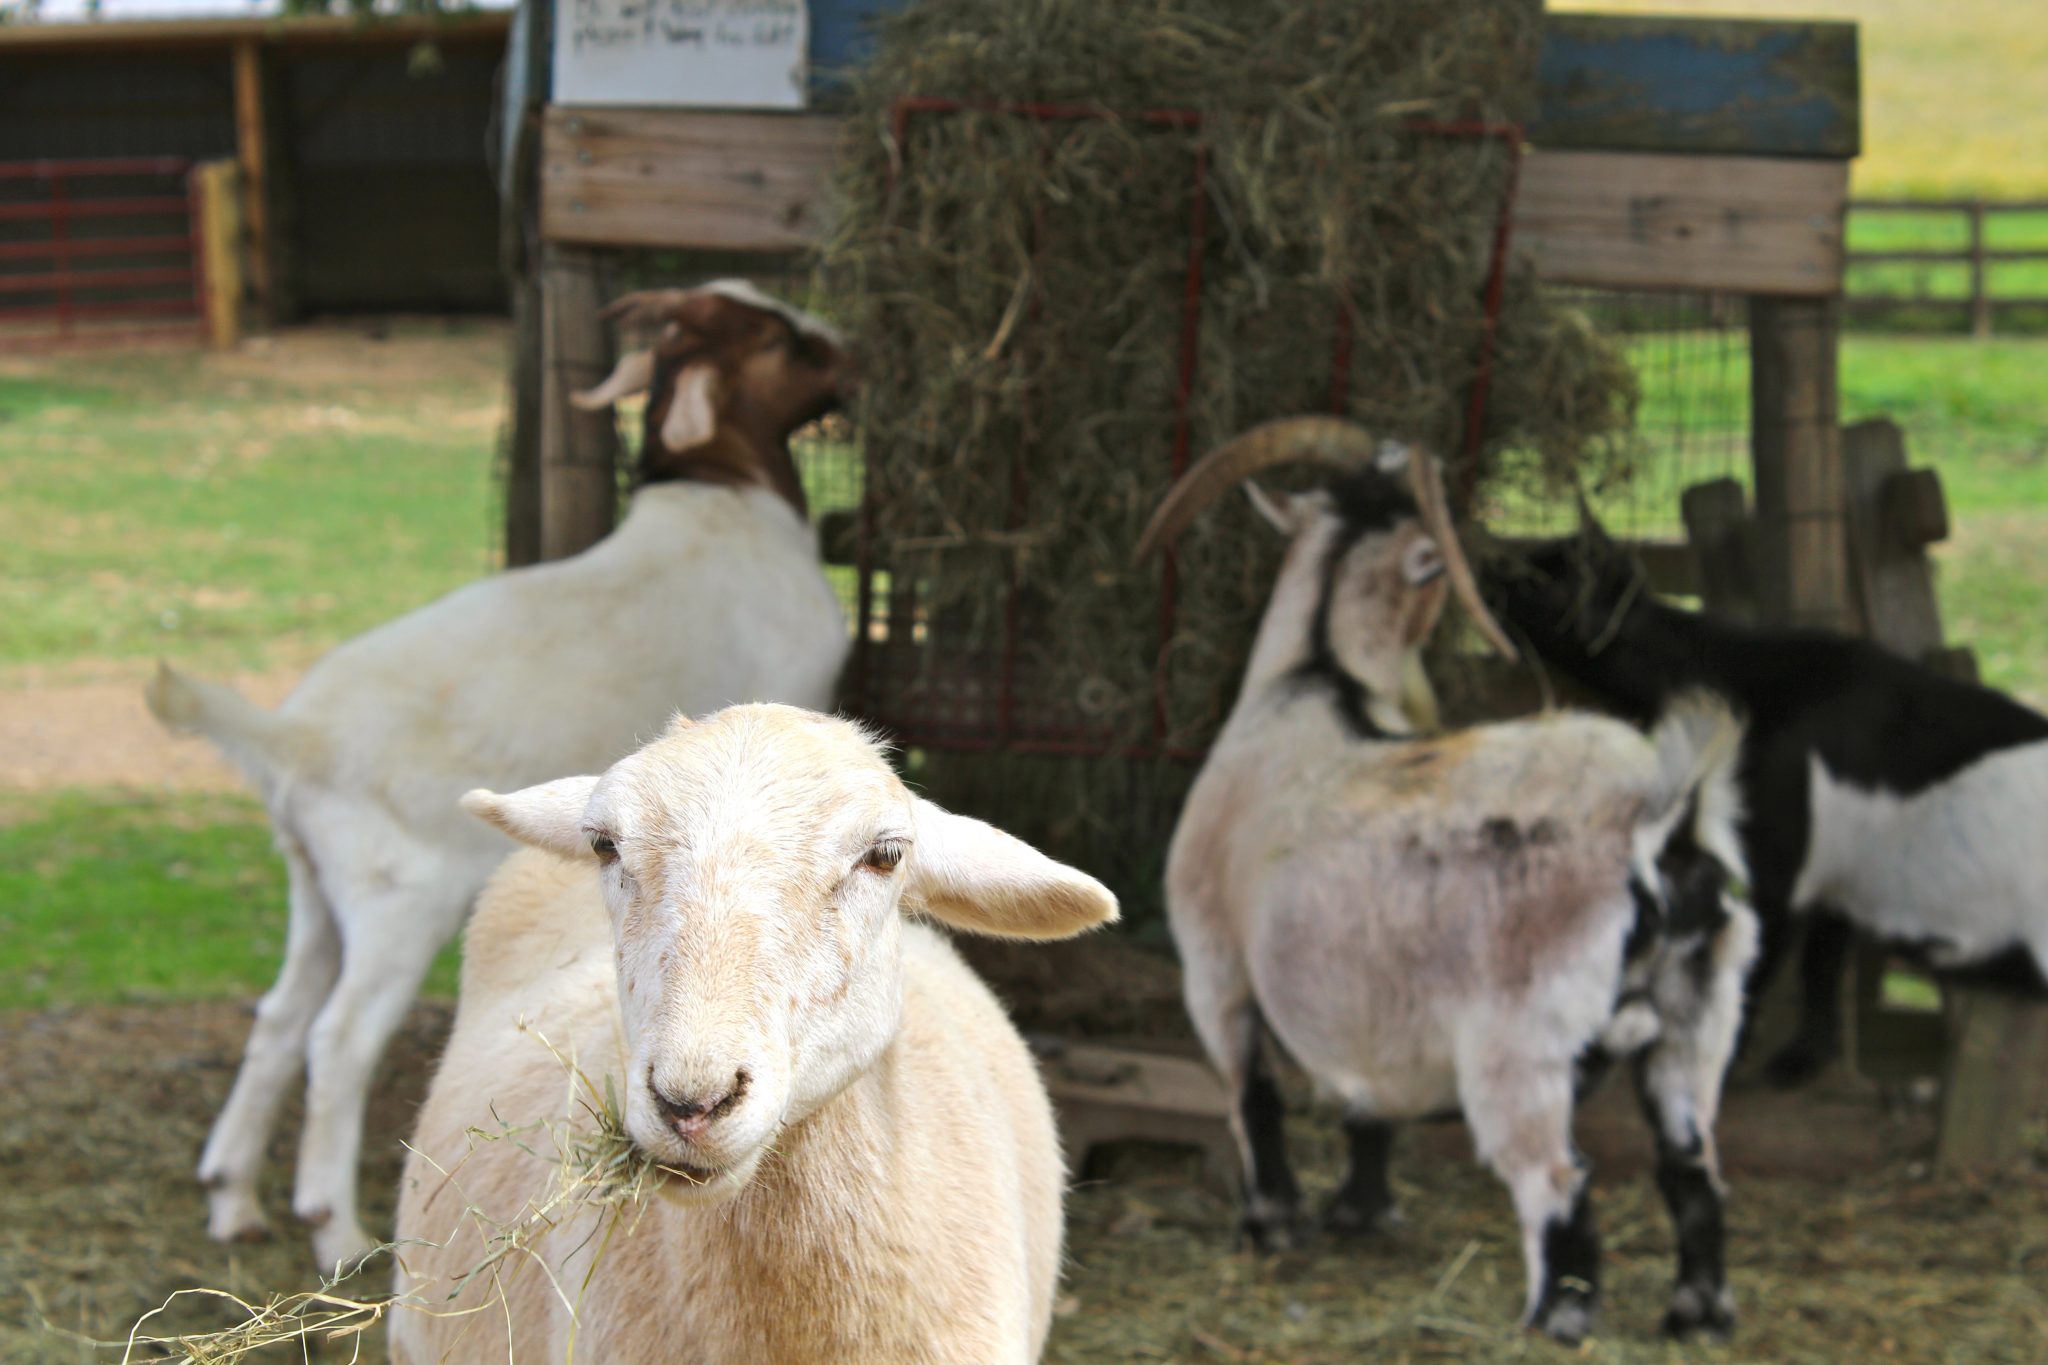 Four goats eating hay in a farmyard on a farm.